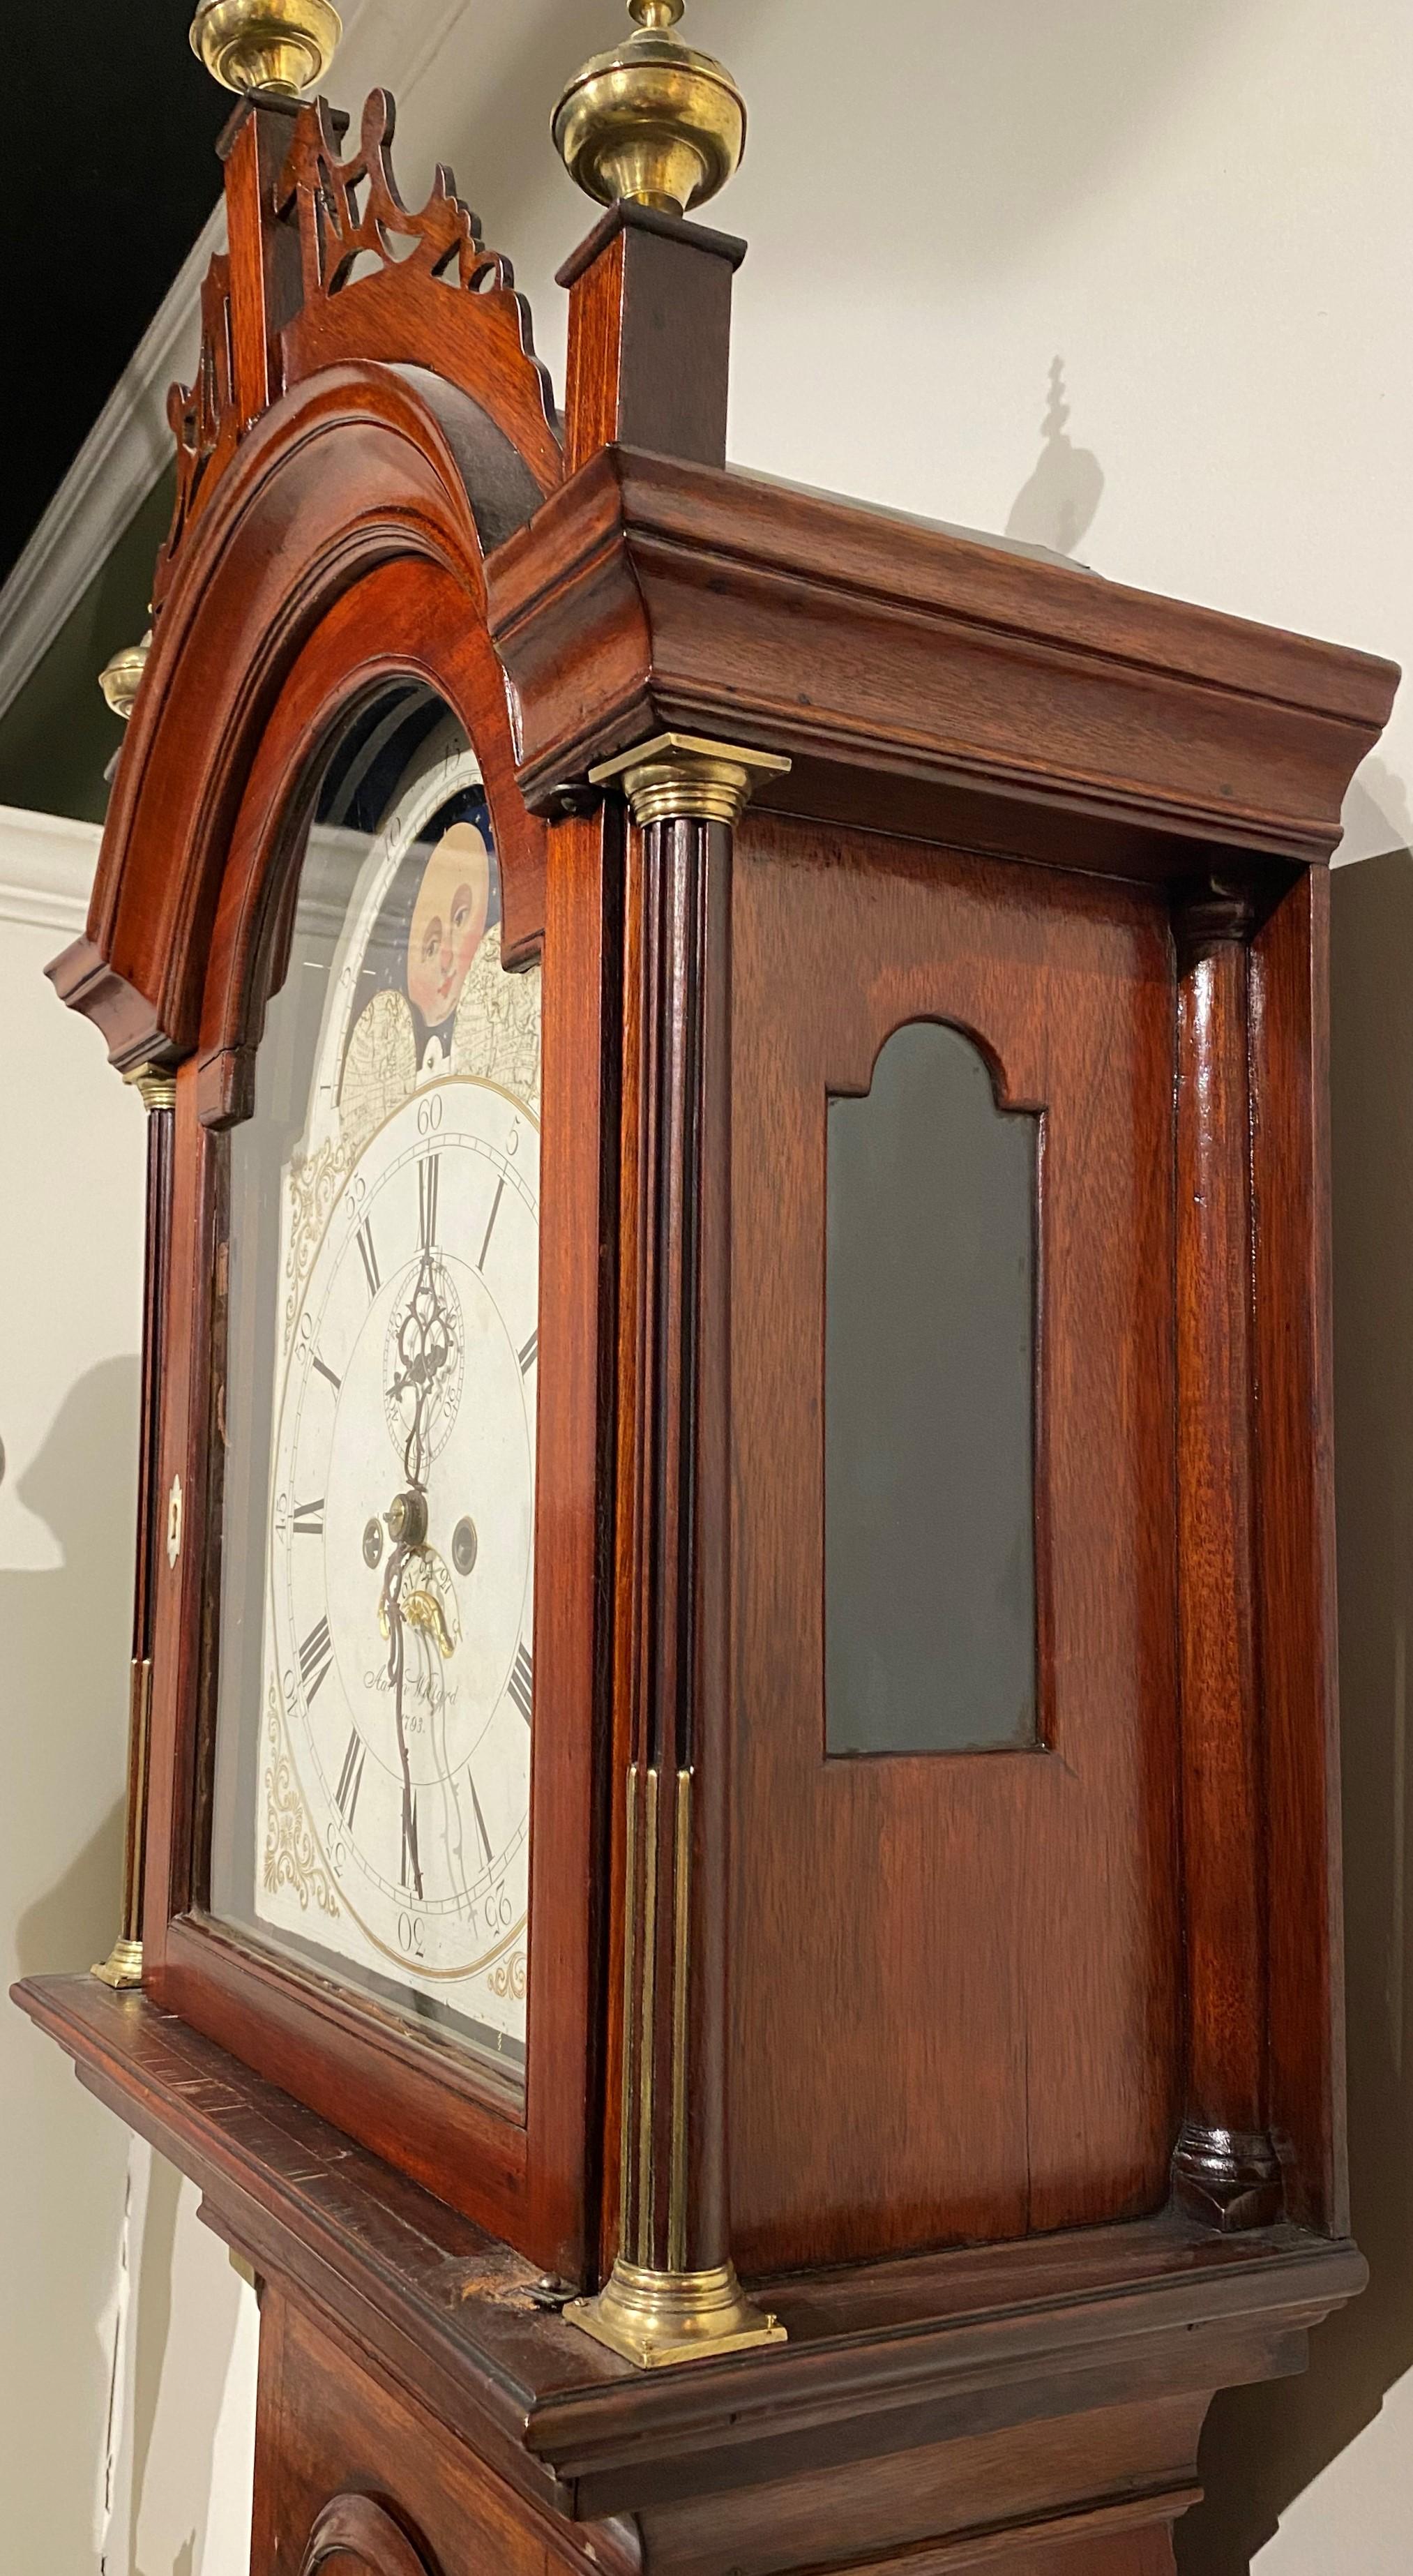 American Aaron Willard Mahogany Tall Case Clock with Moon Phase Dial 1793